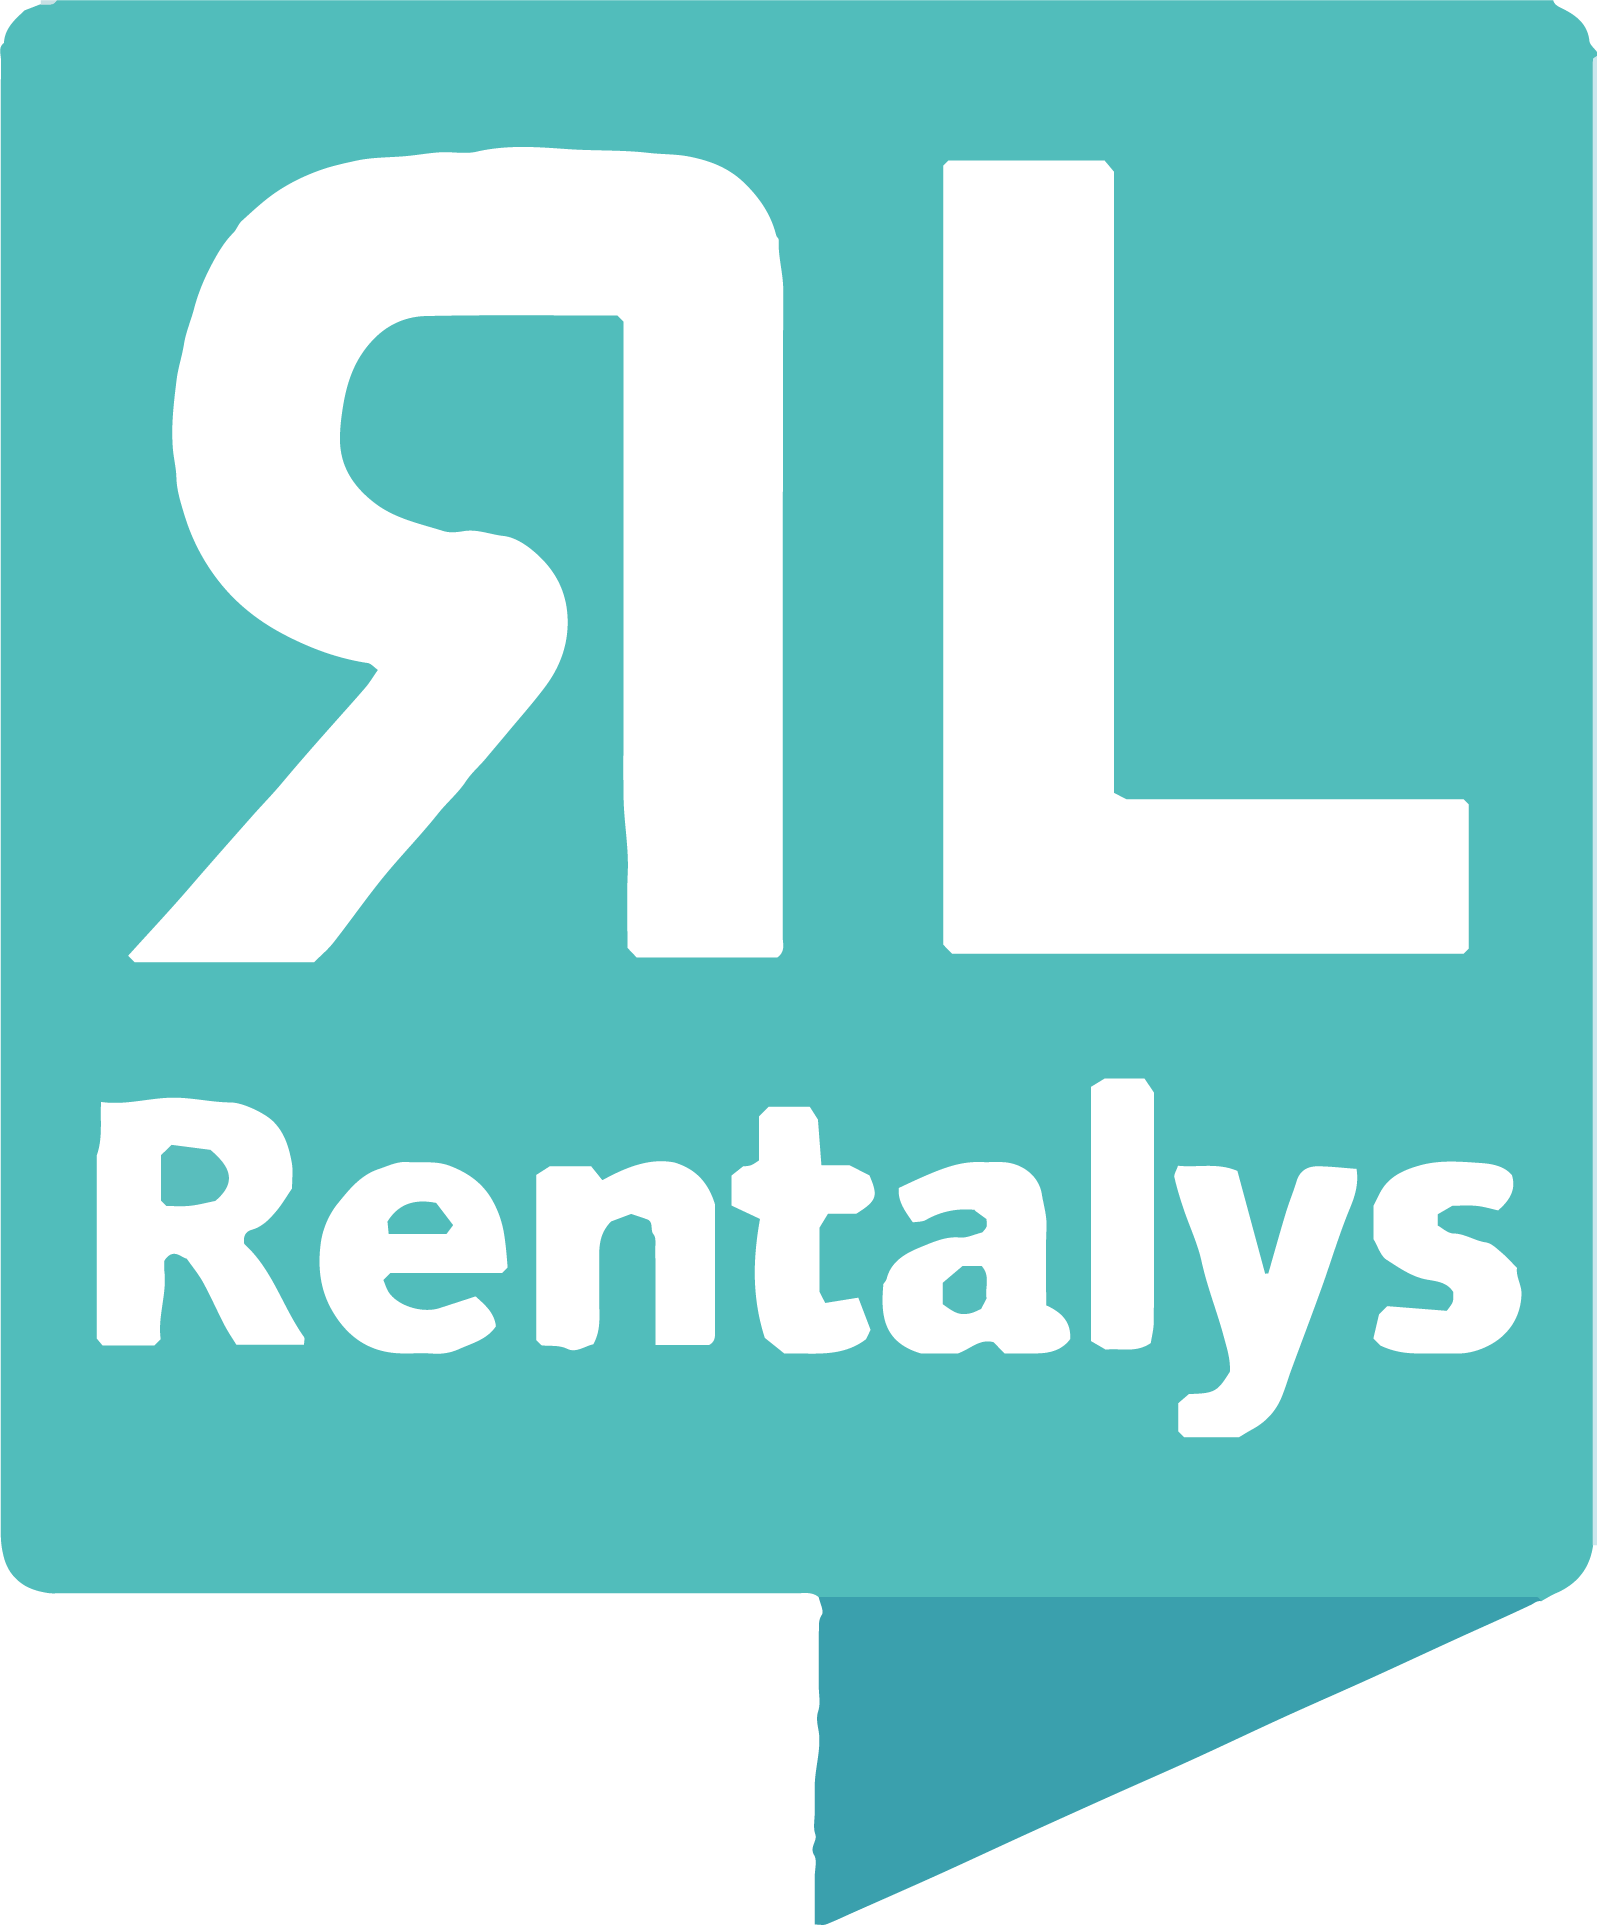 Rentalys logo